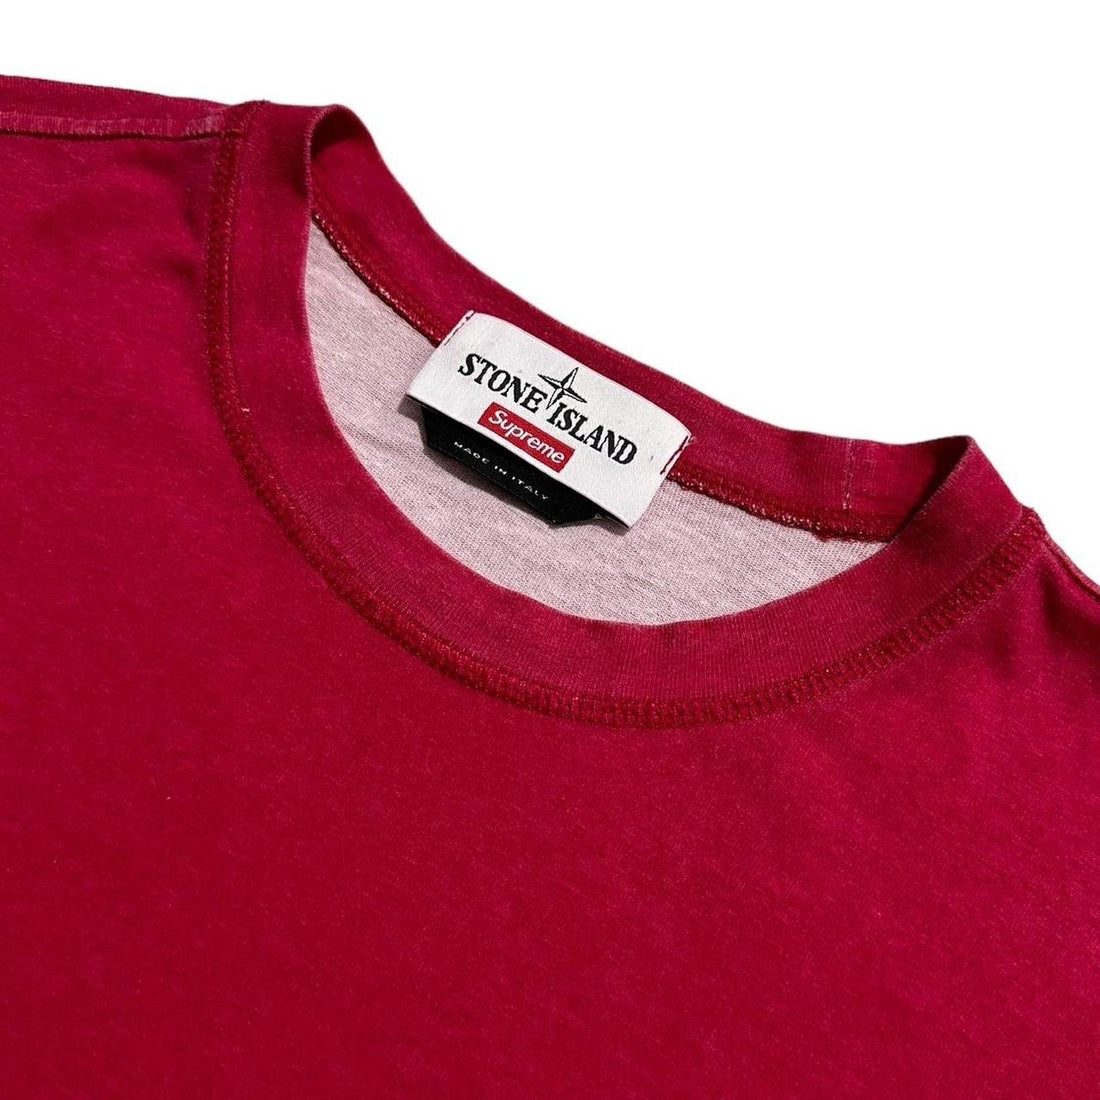 Stone Island Supreme Red T-Shirt